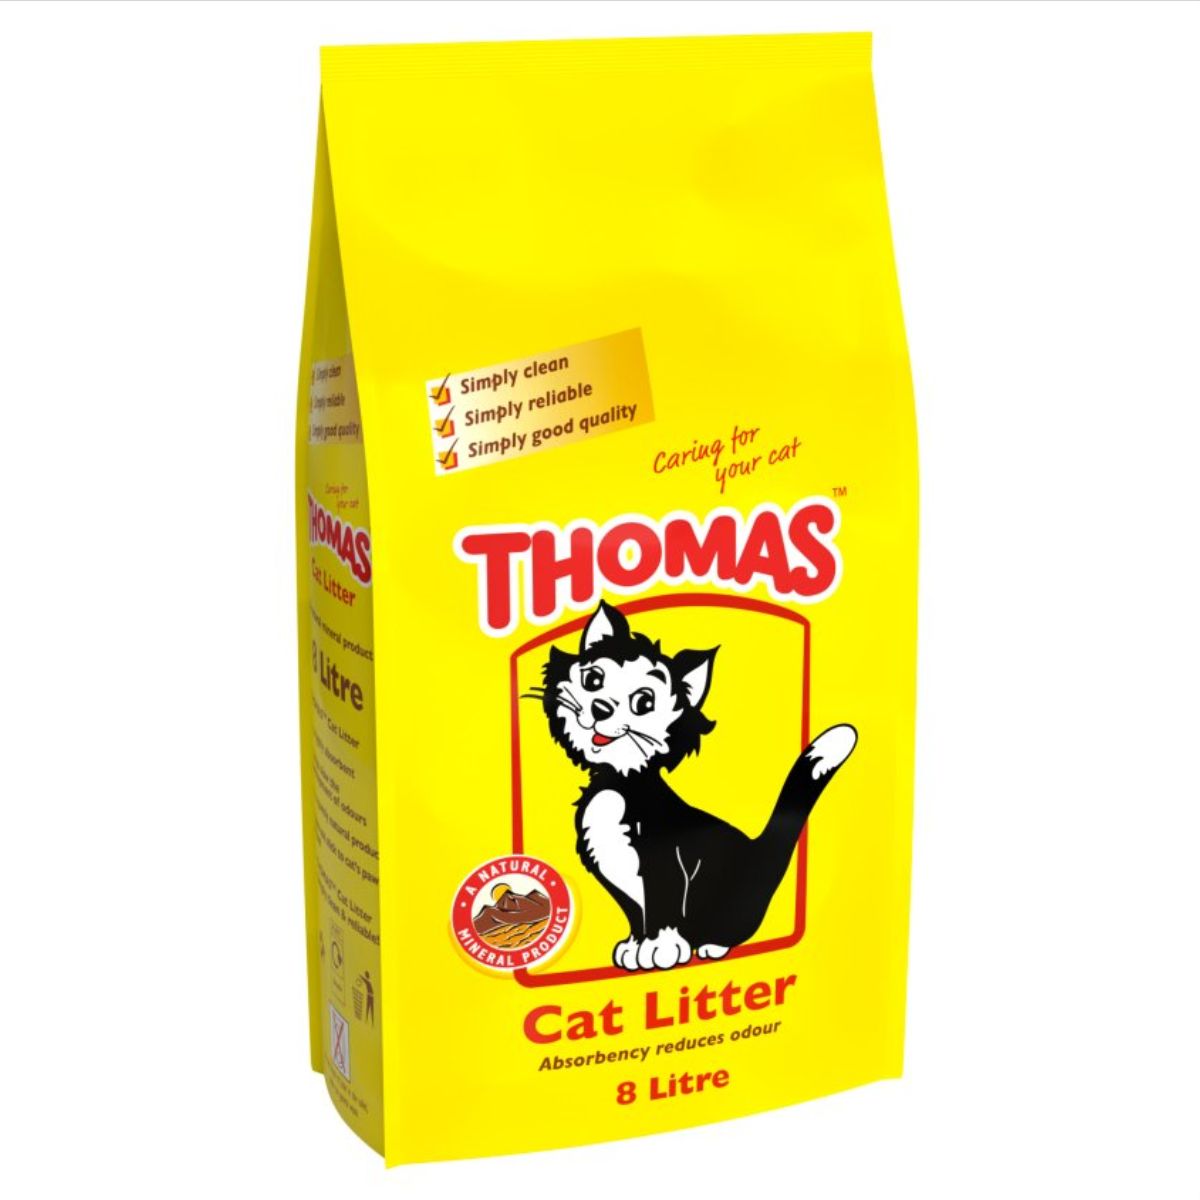 Thomas - Cat Litter - 8L bag.